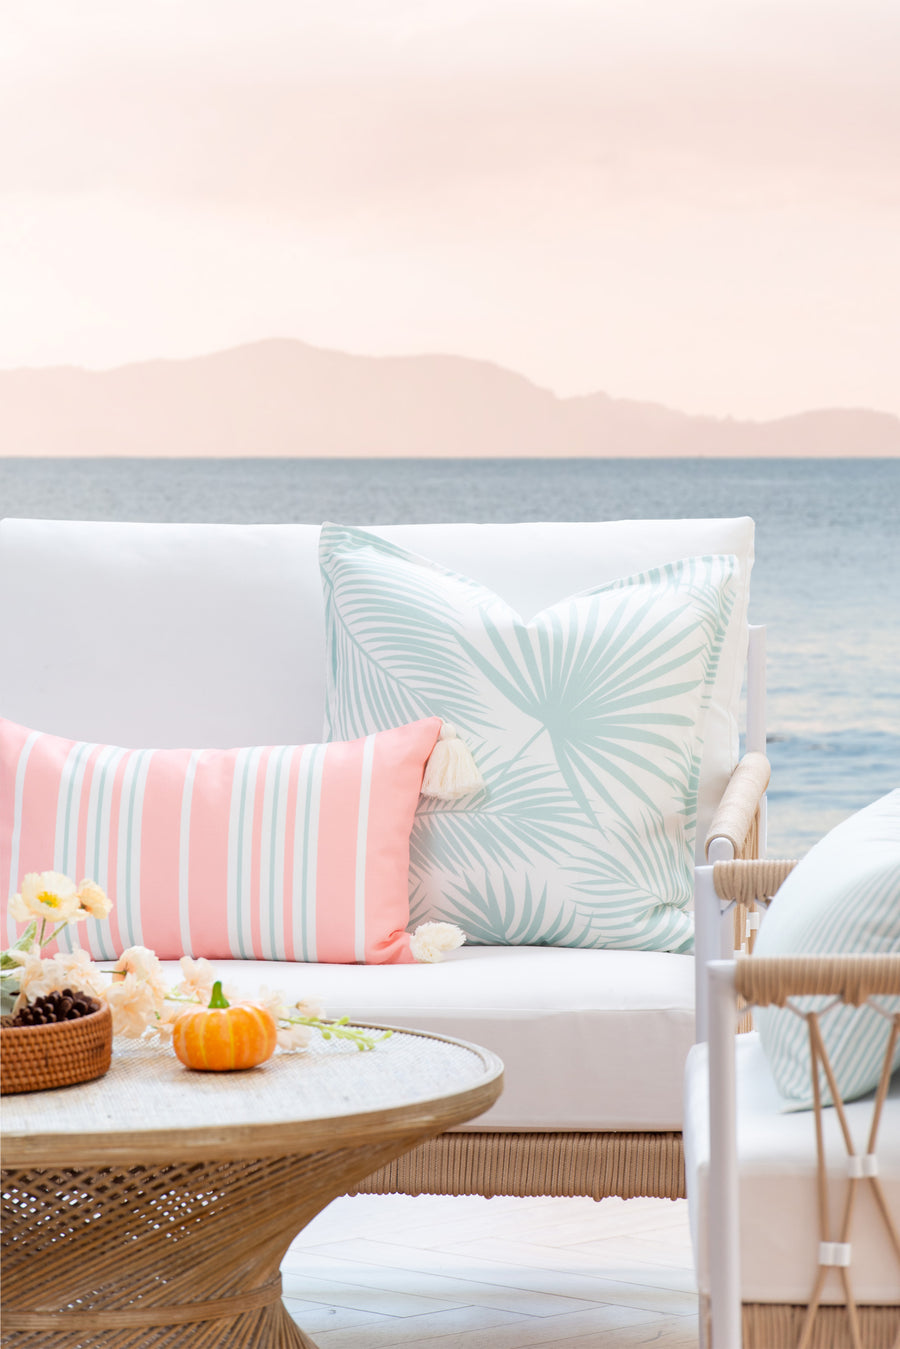 Coastal Indoor Outdoor Lumbar Pillow Cover, Stripe Tassel, Muted Aqua Blush Pink, 12